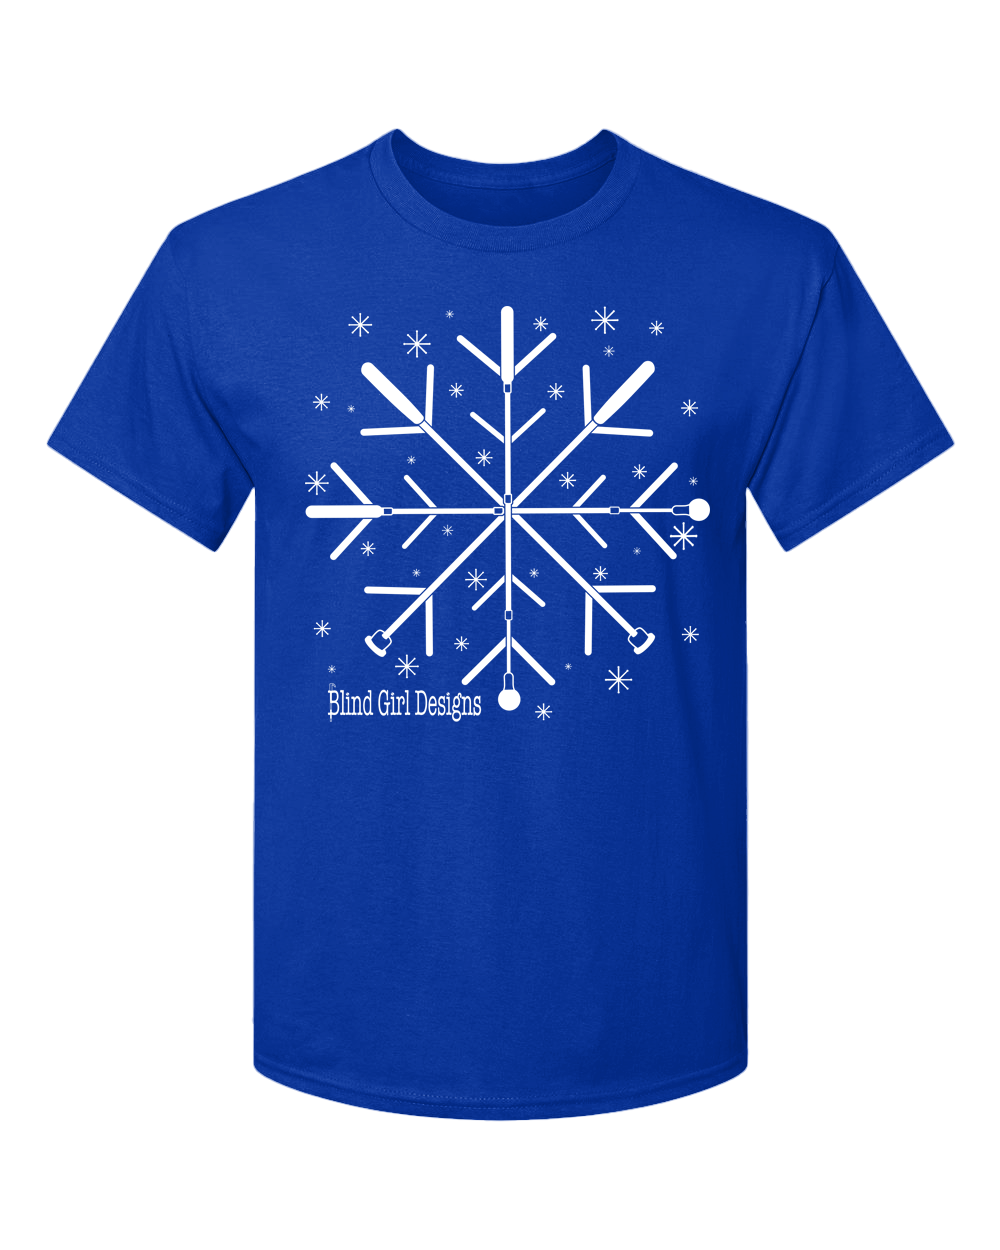 New! 3D Tactile White Cane Snowflake T-Shirt - royal blue